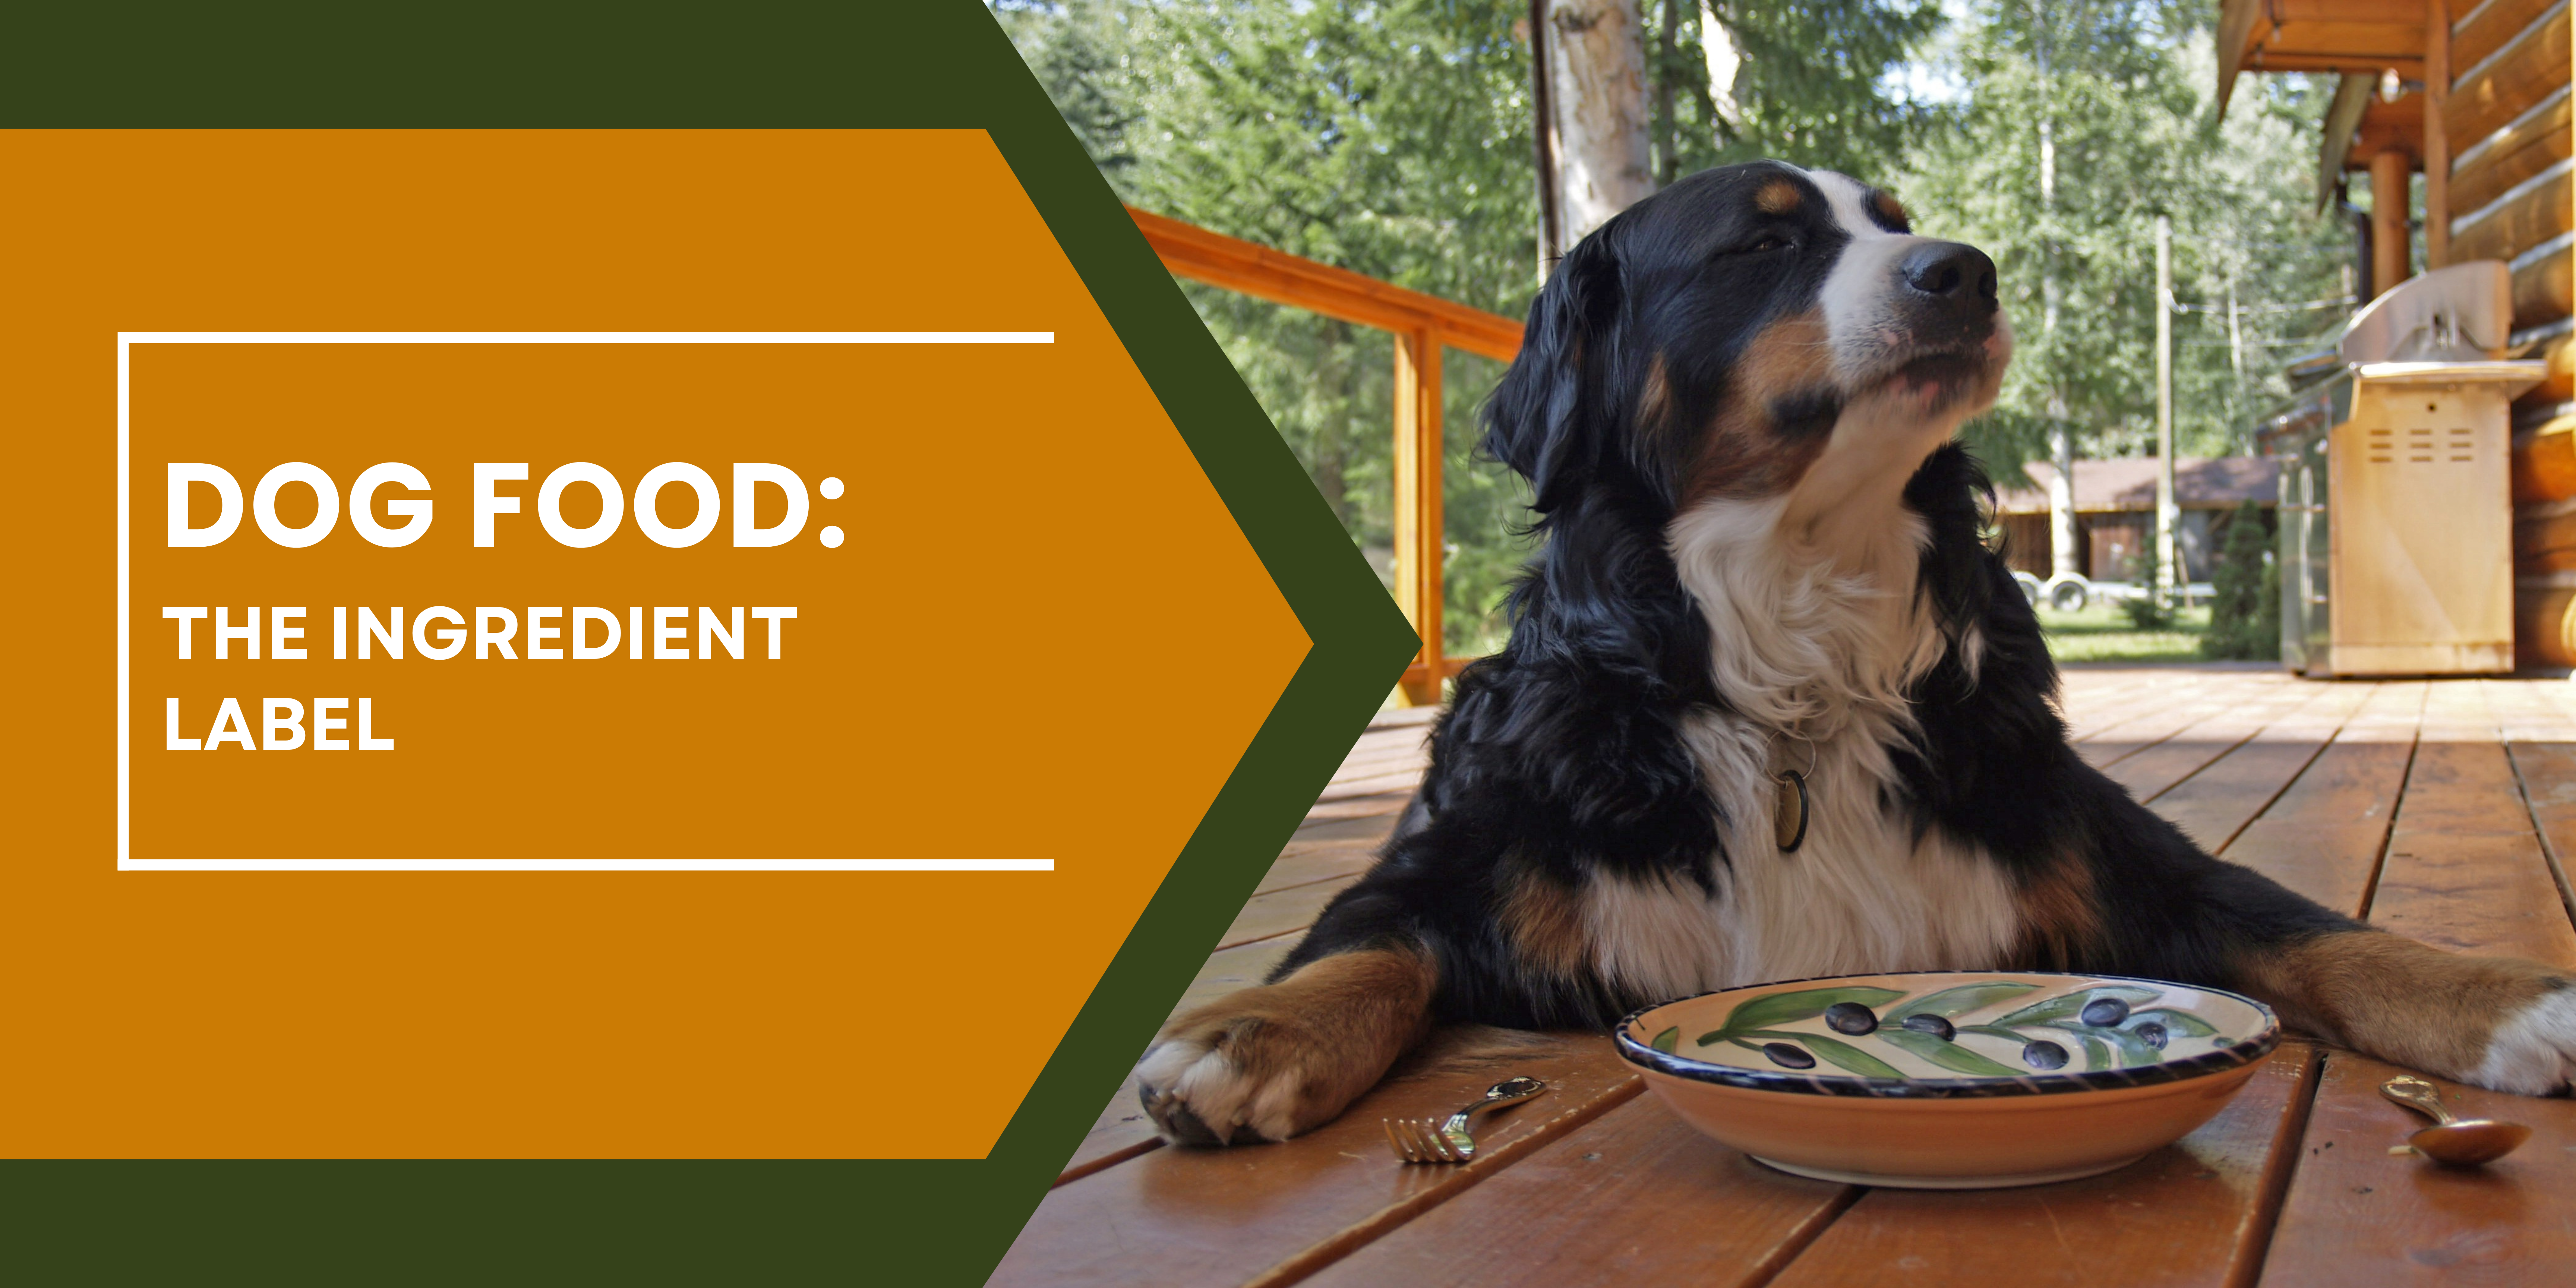 Dog Food: The Ingredient Label